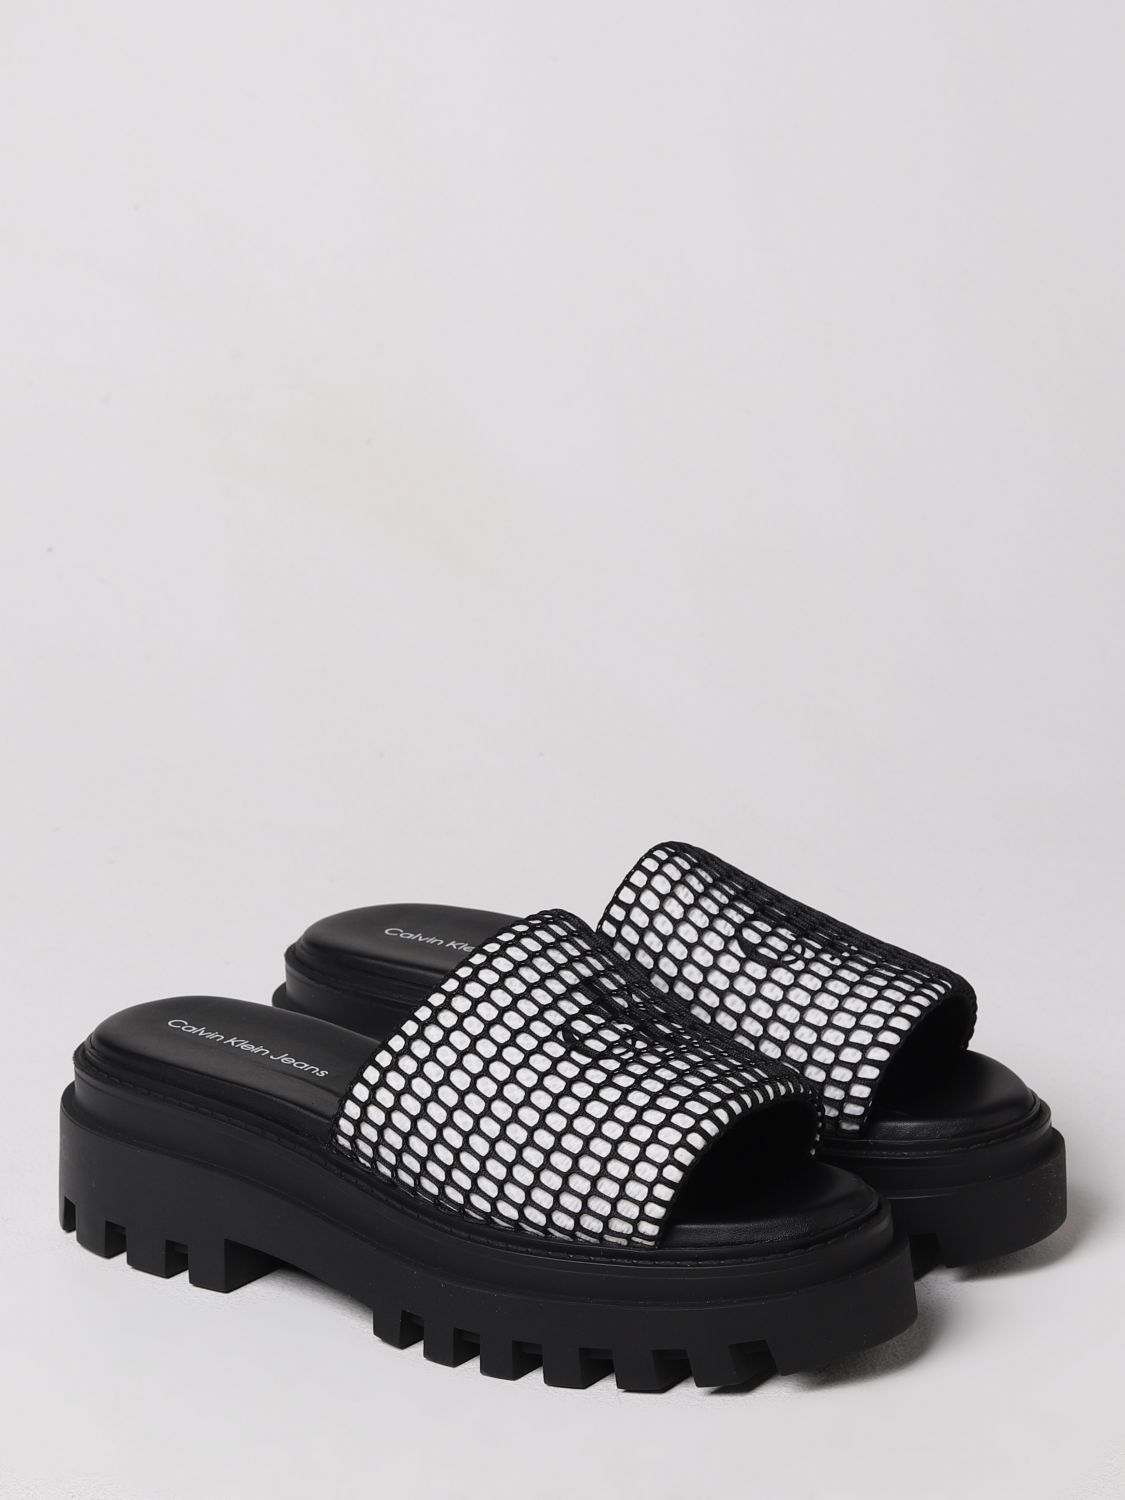 CALVIN KLEIN JEANS: Zapatos de cuña para mujer, | Zapatos De CuÑA Calvin YW0YW00950 en línea en GIGLIO.COM